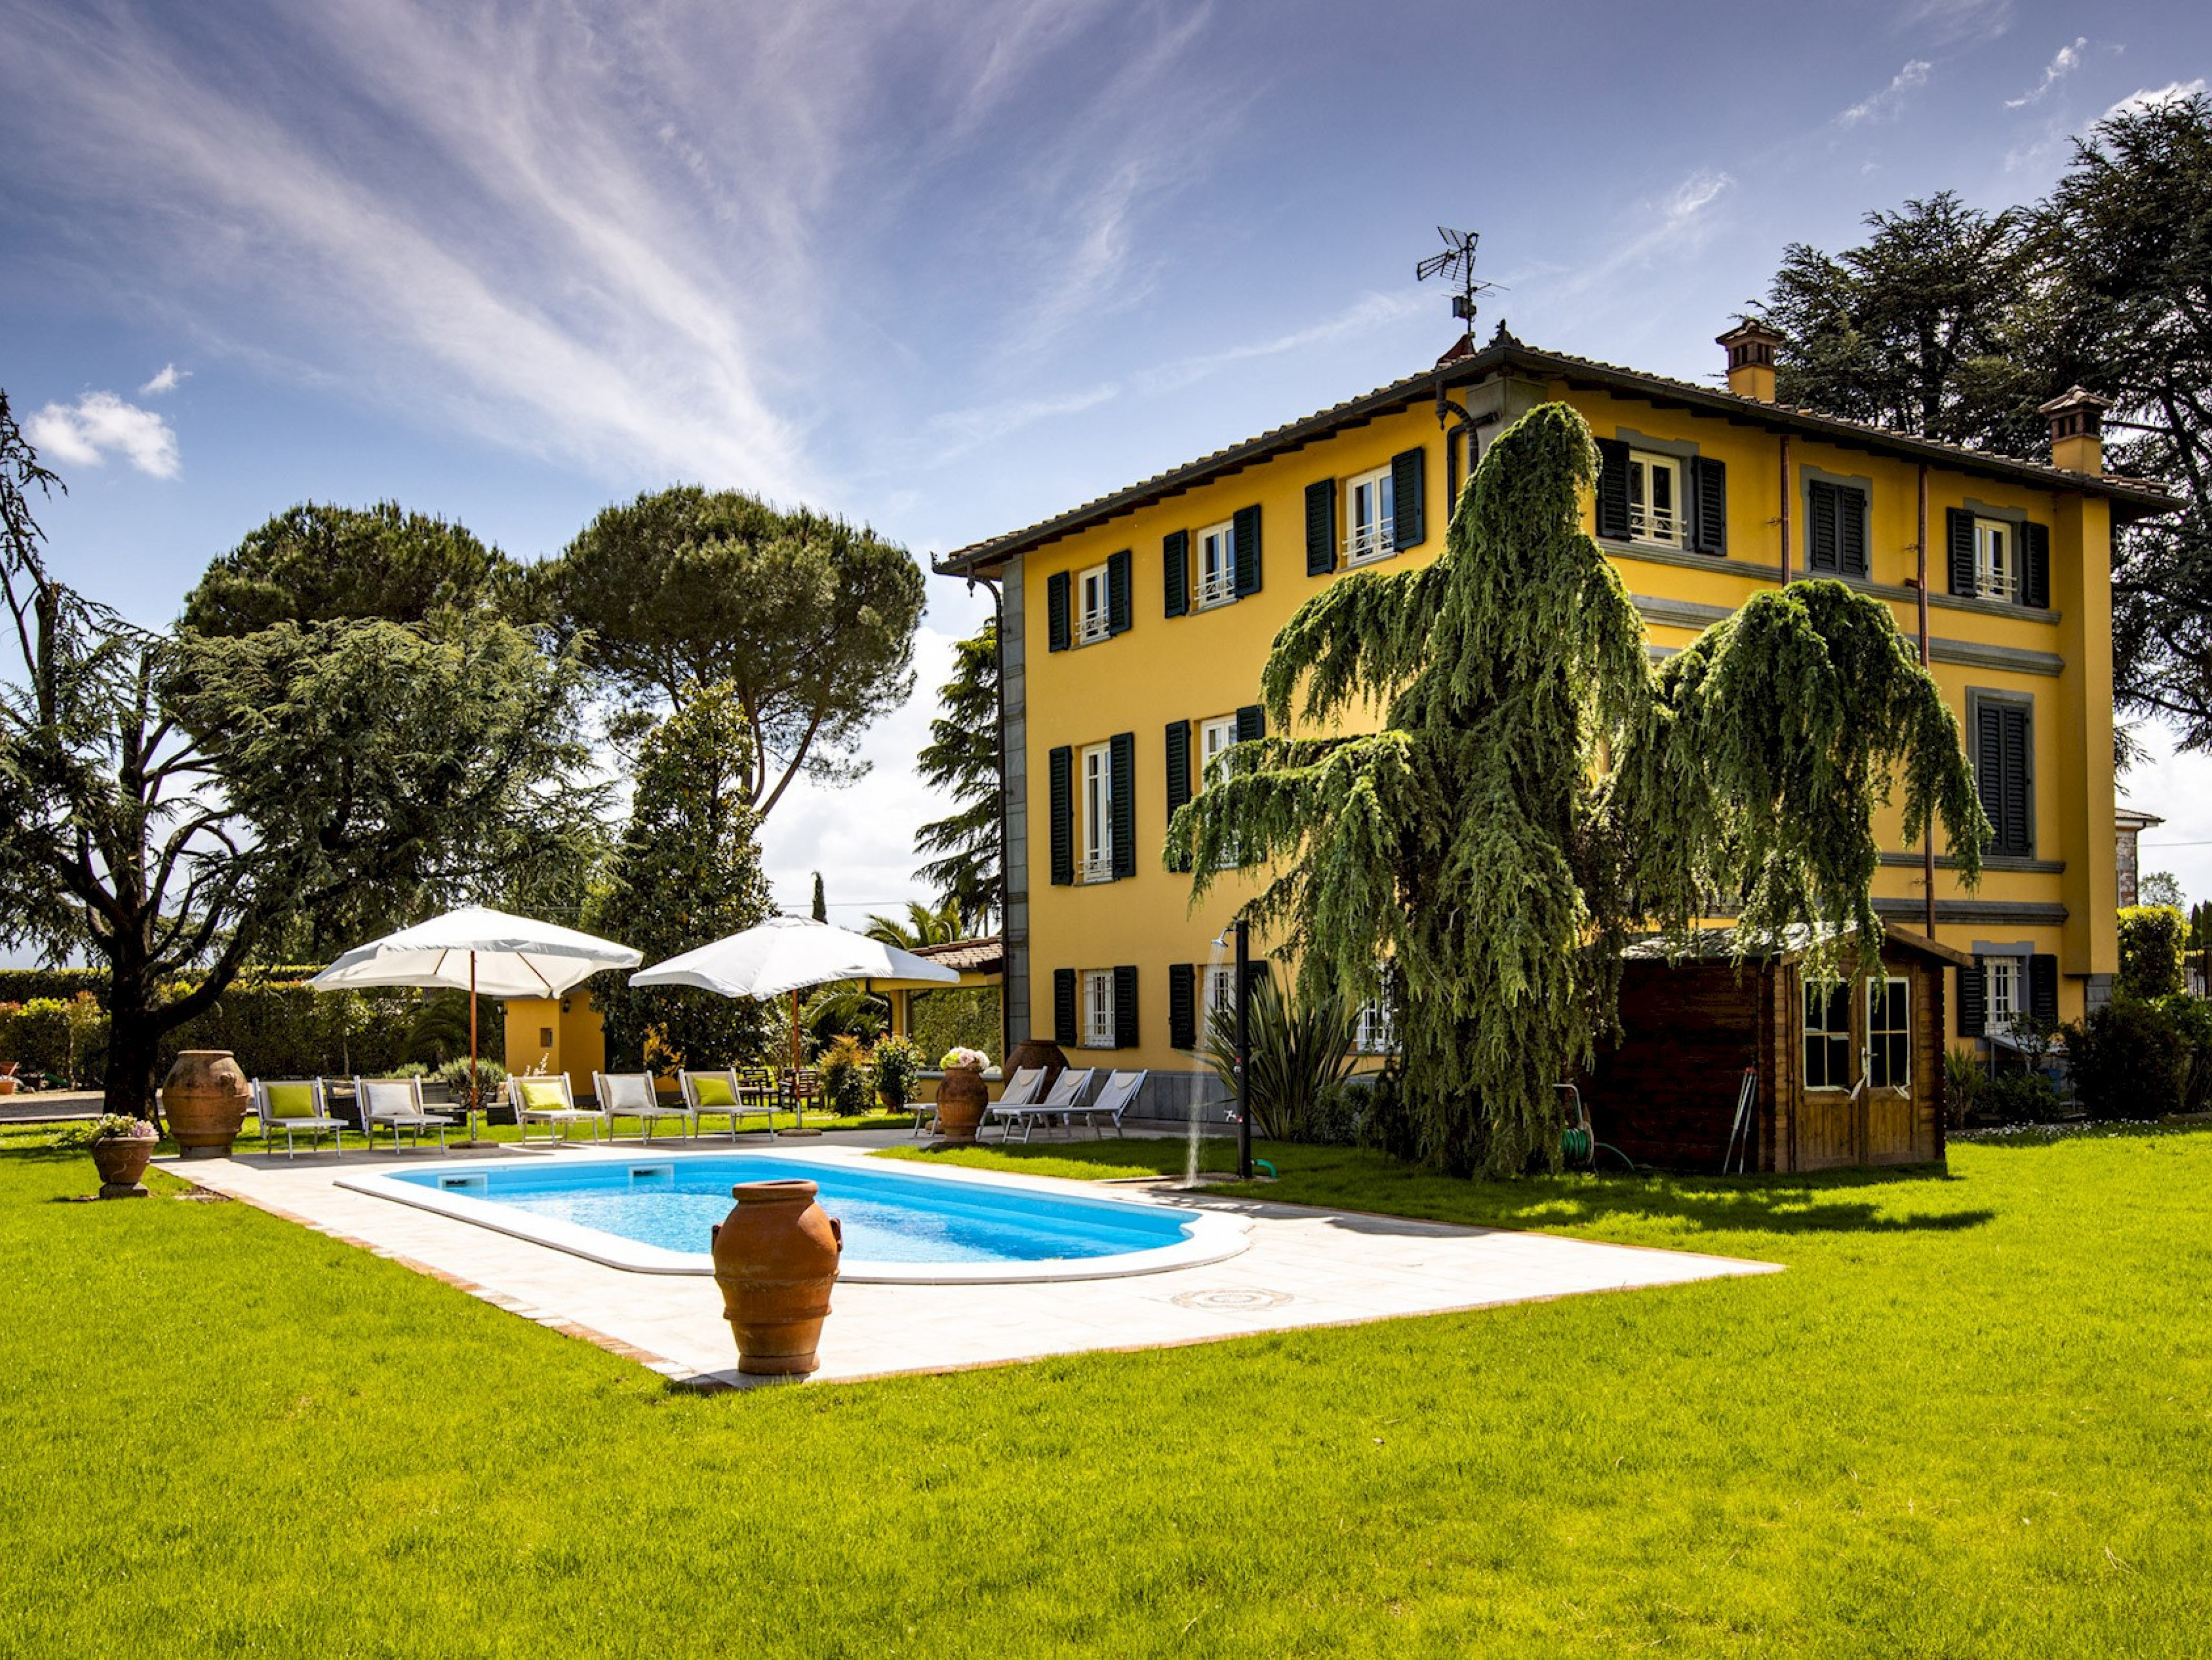 Villa Luigina 4 bedroom vacation rental